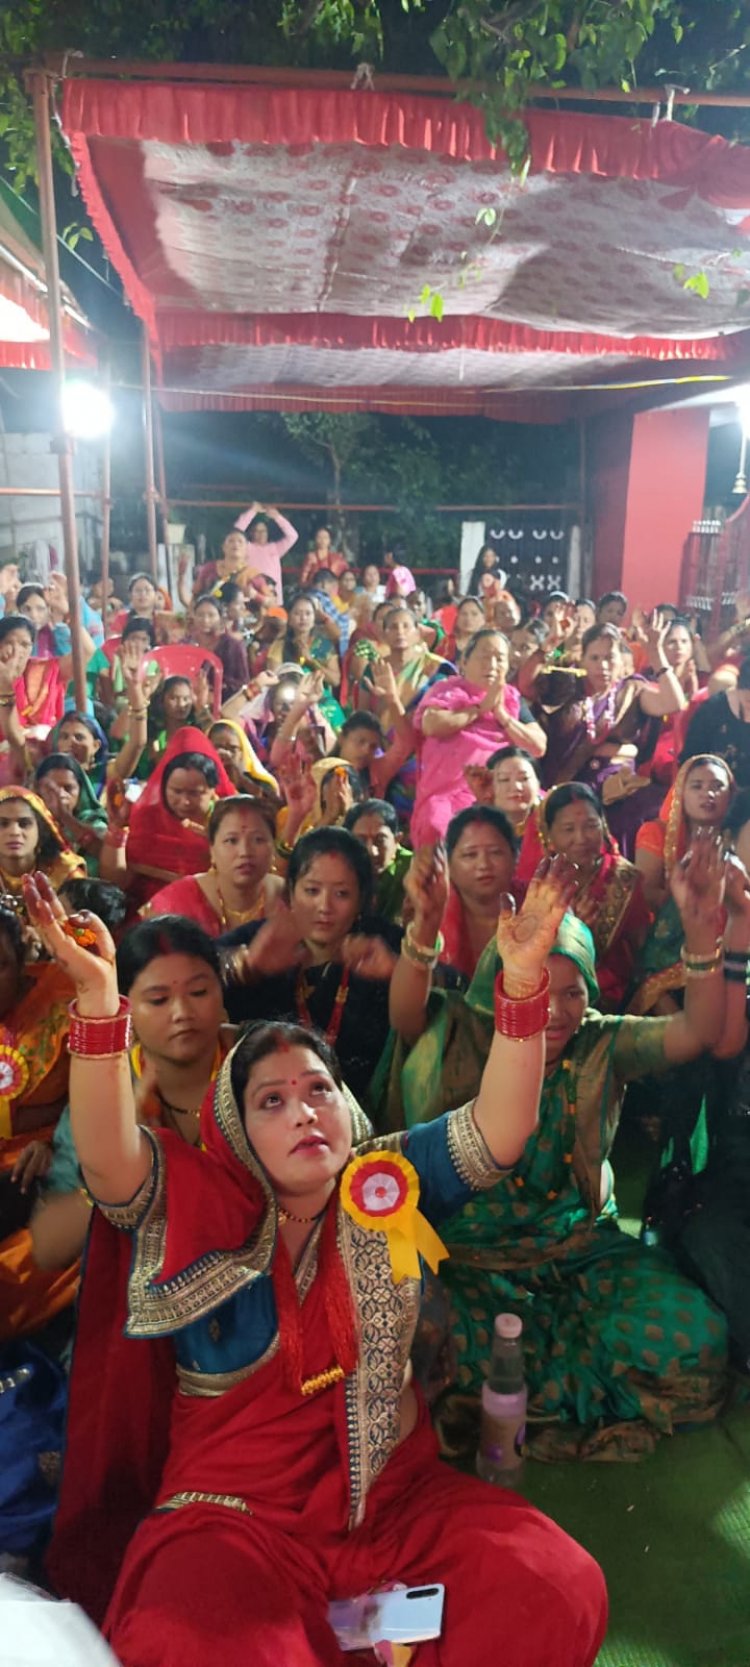 गोरखा महिला समिति ने हर्षोल्लास के साथ मनाया हरितालिका तीज महोत्सव